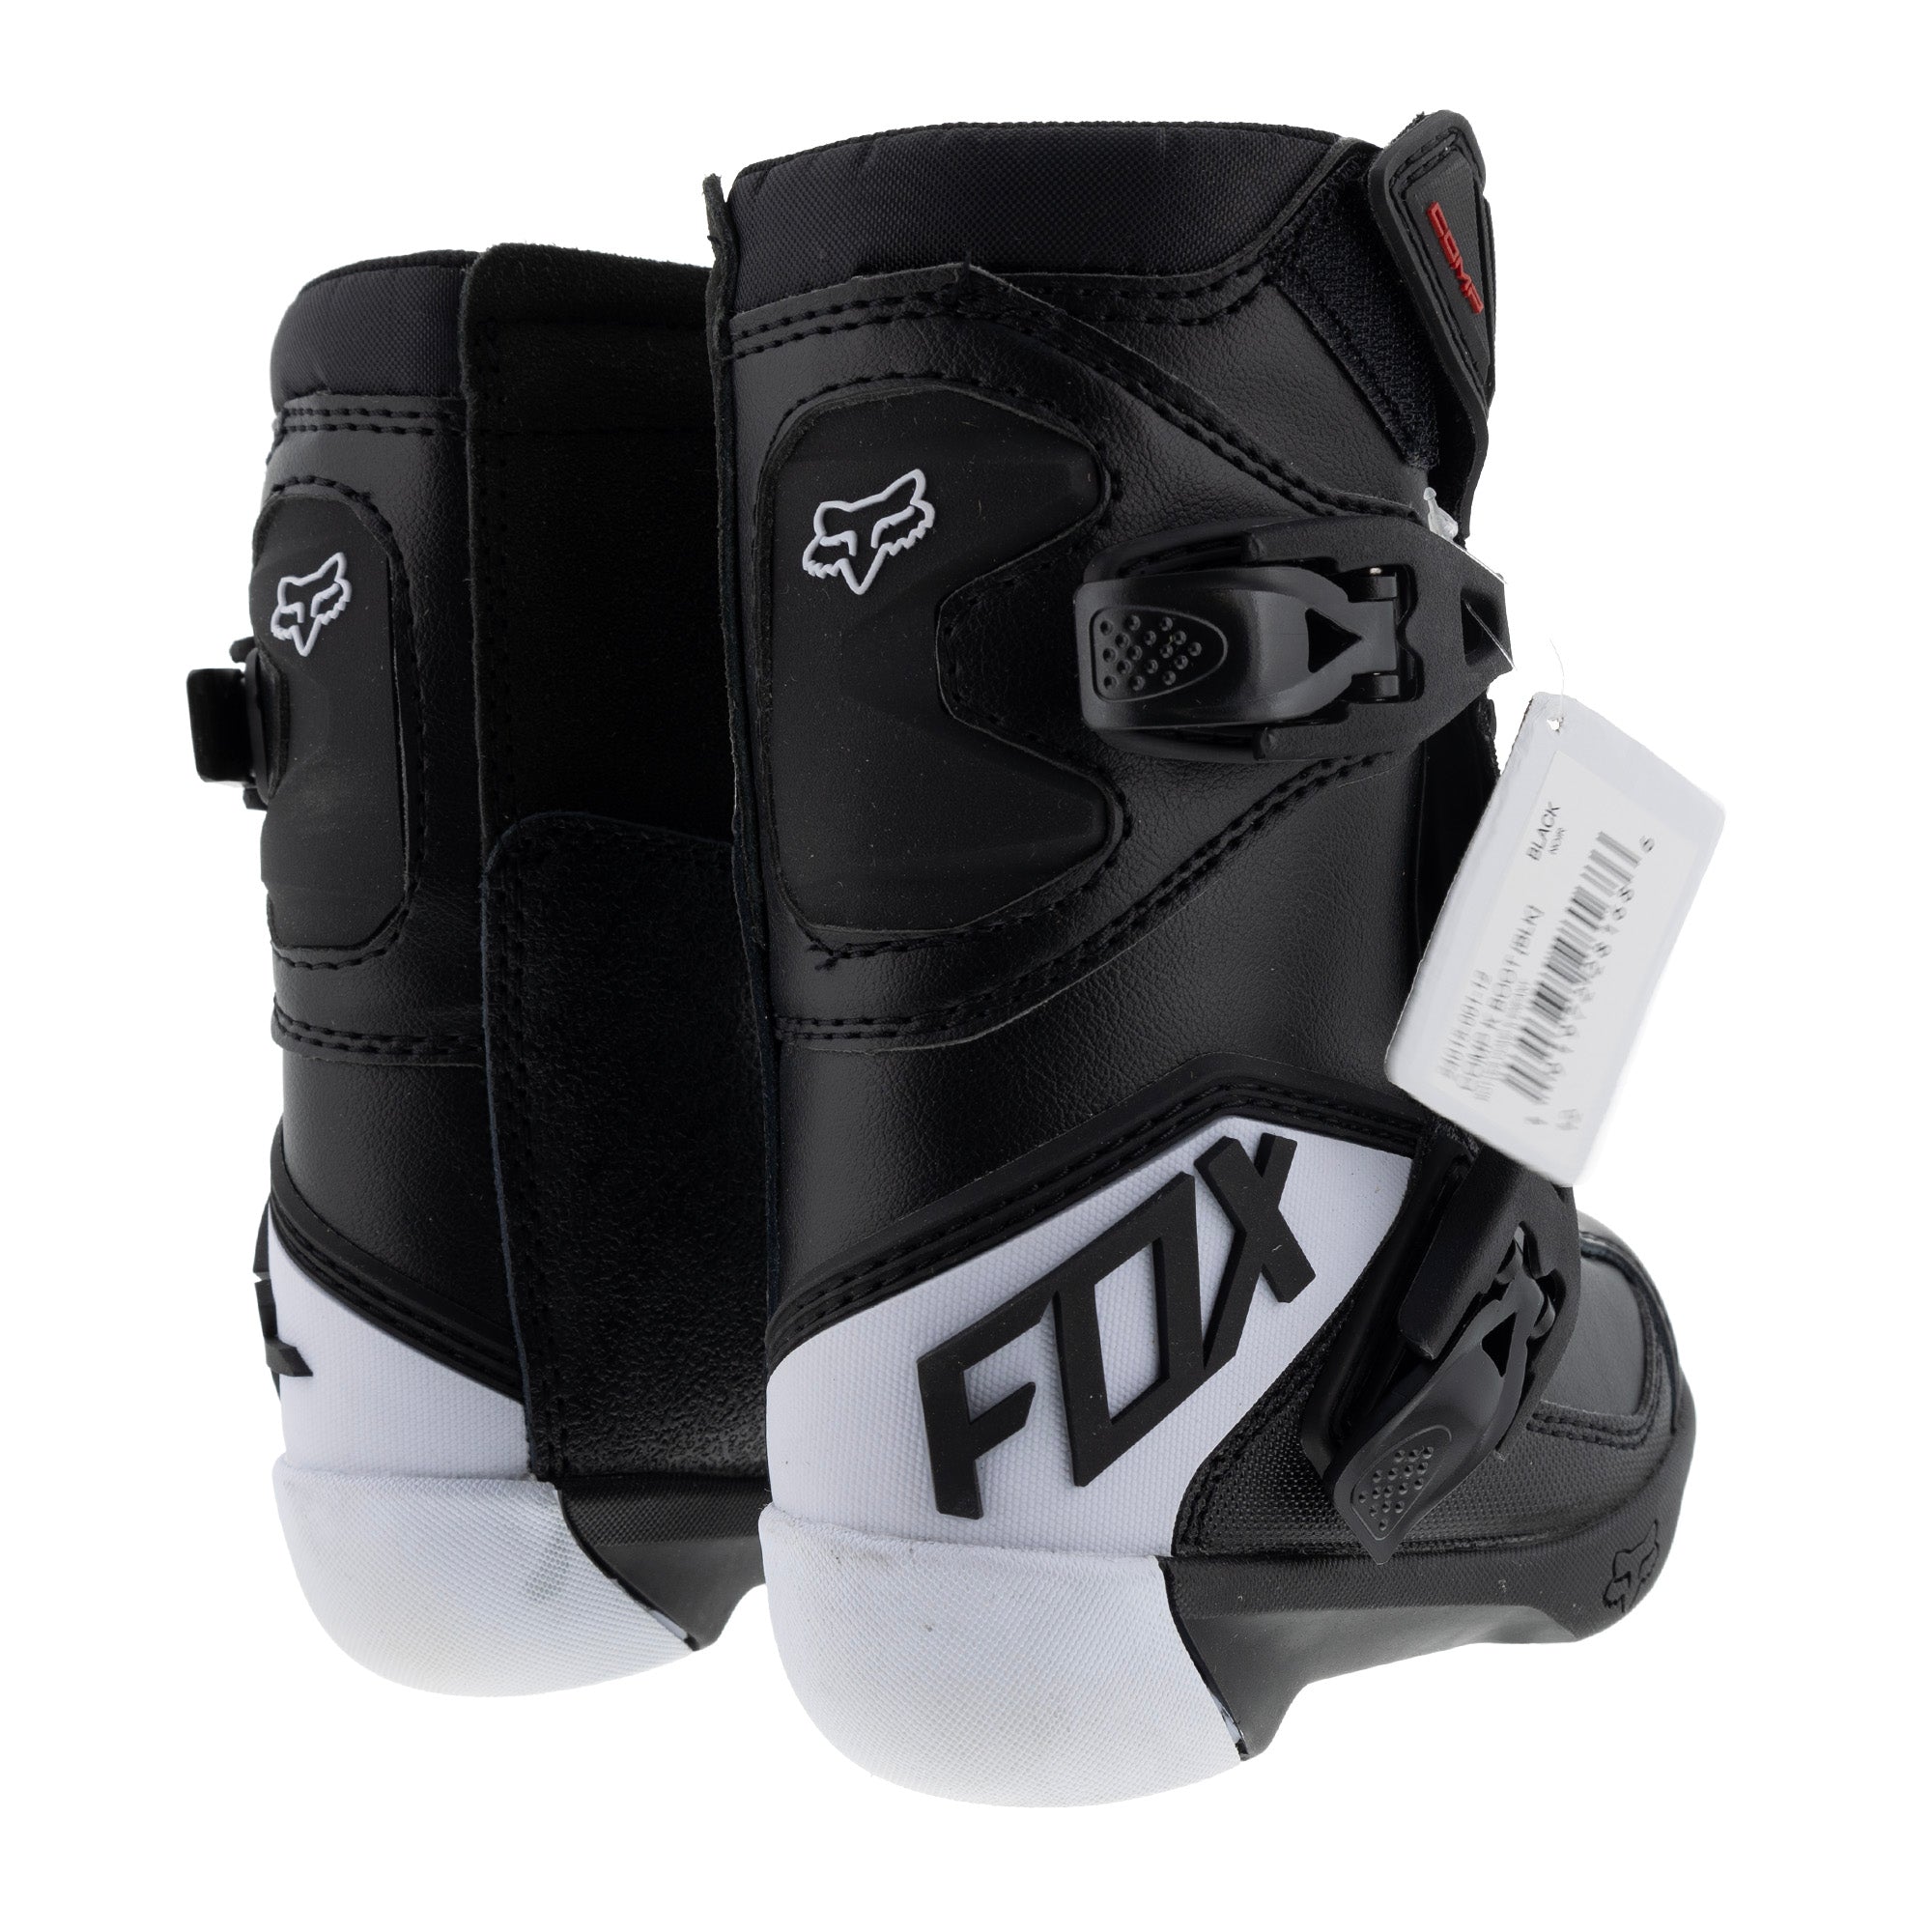 Fox Racing 24015-001-12 Youth Comp K Boots Easy Buckles TPR Shin Plate Burn Guard Black -